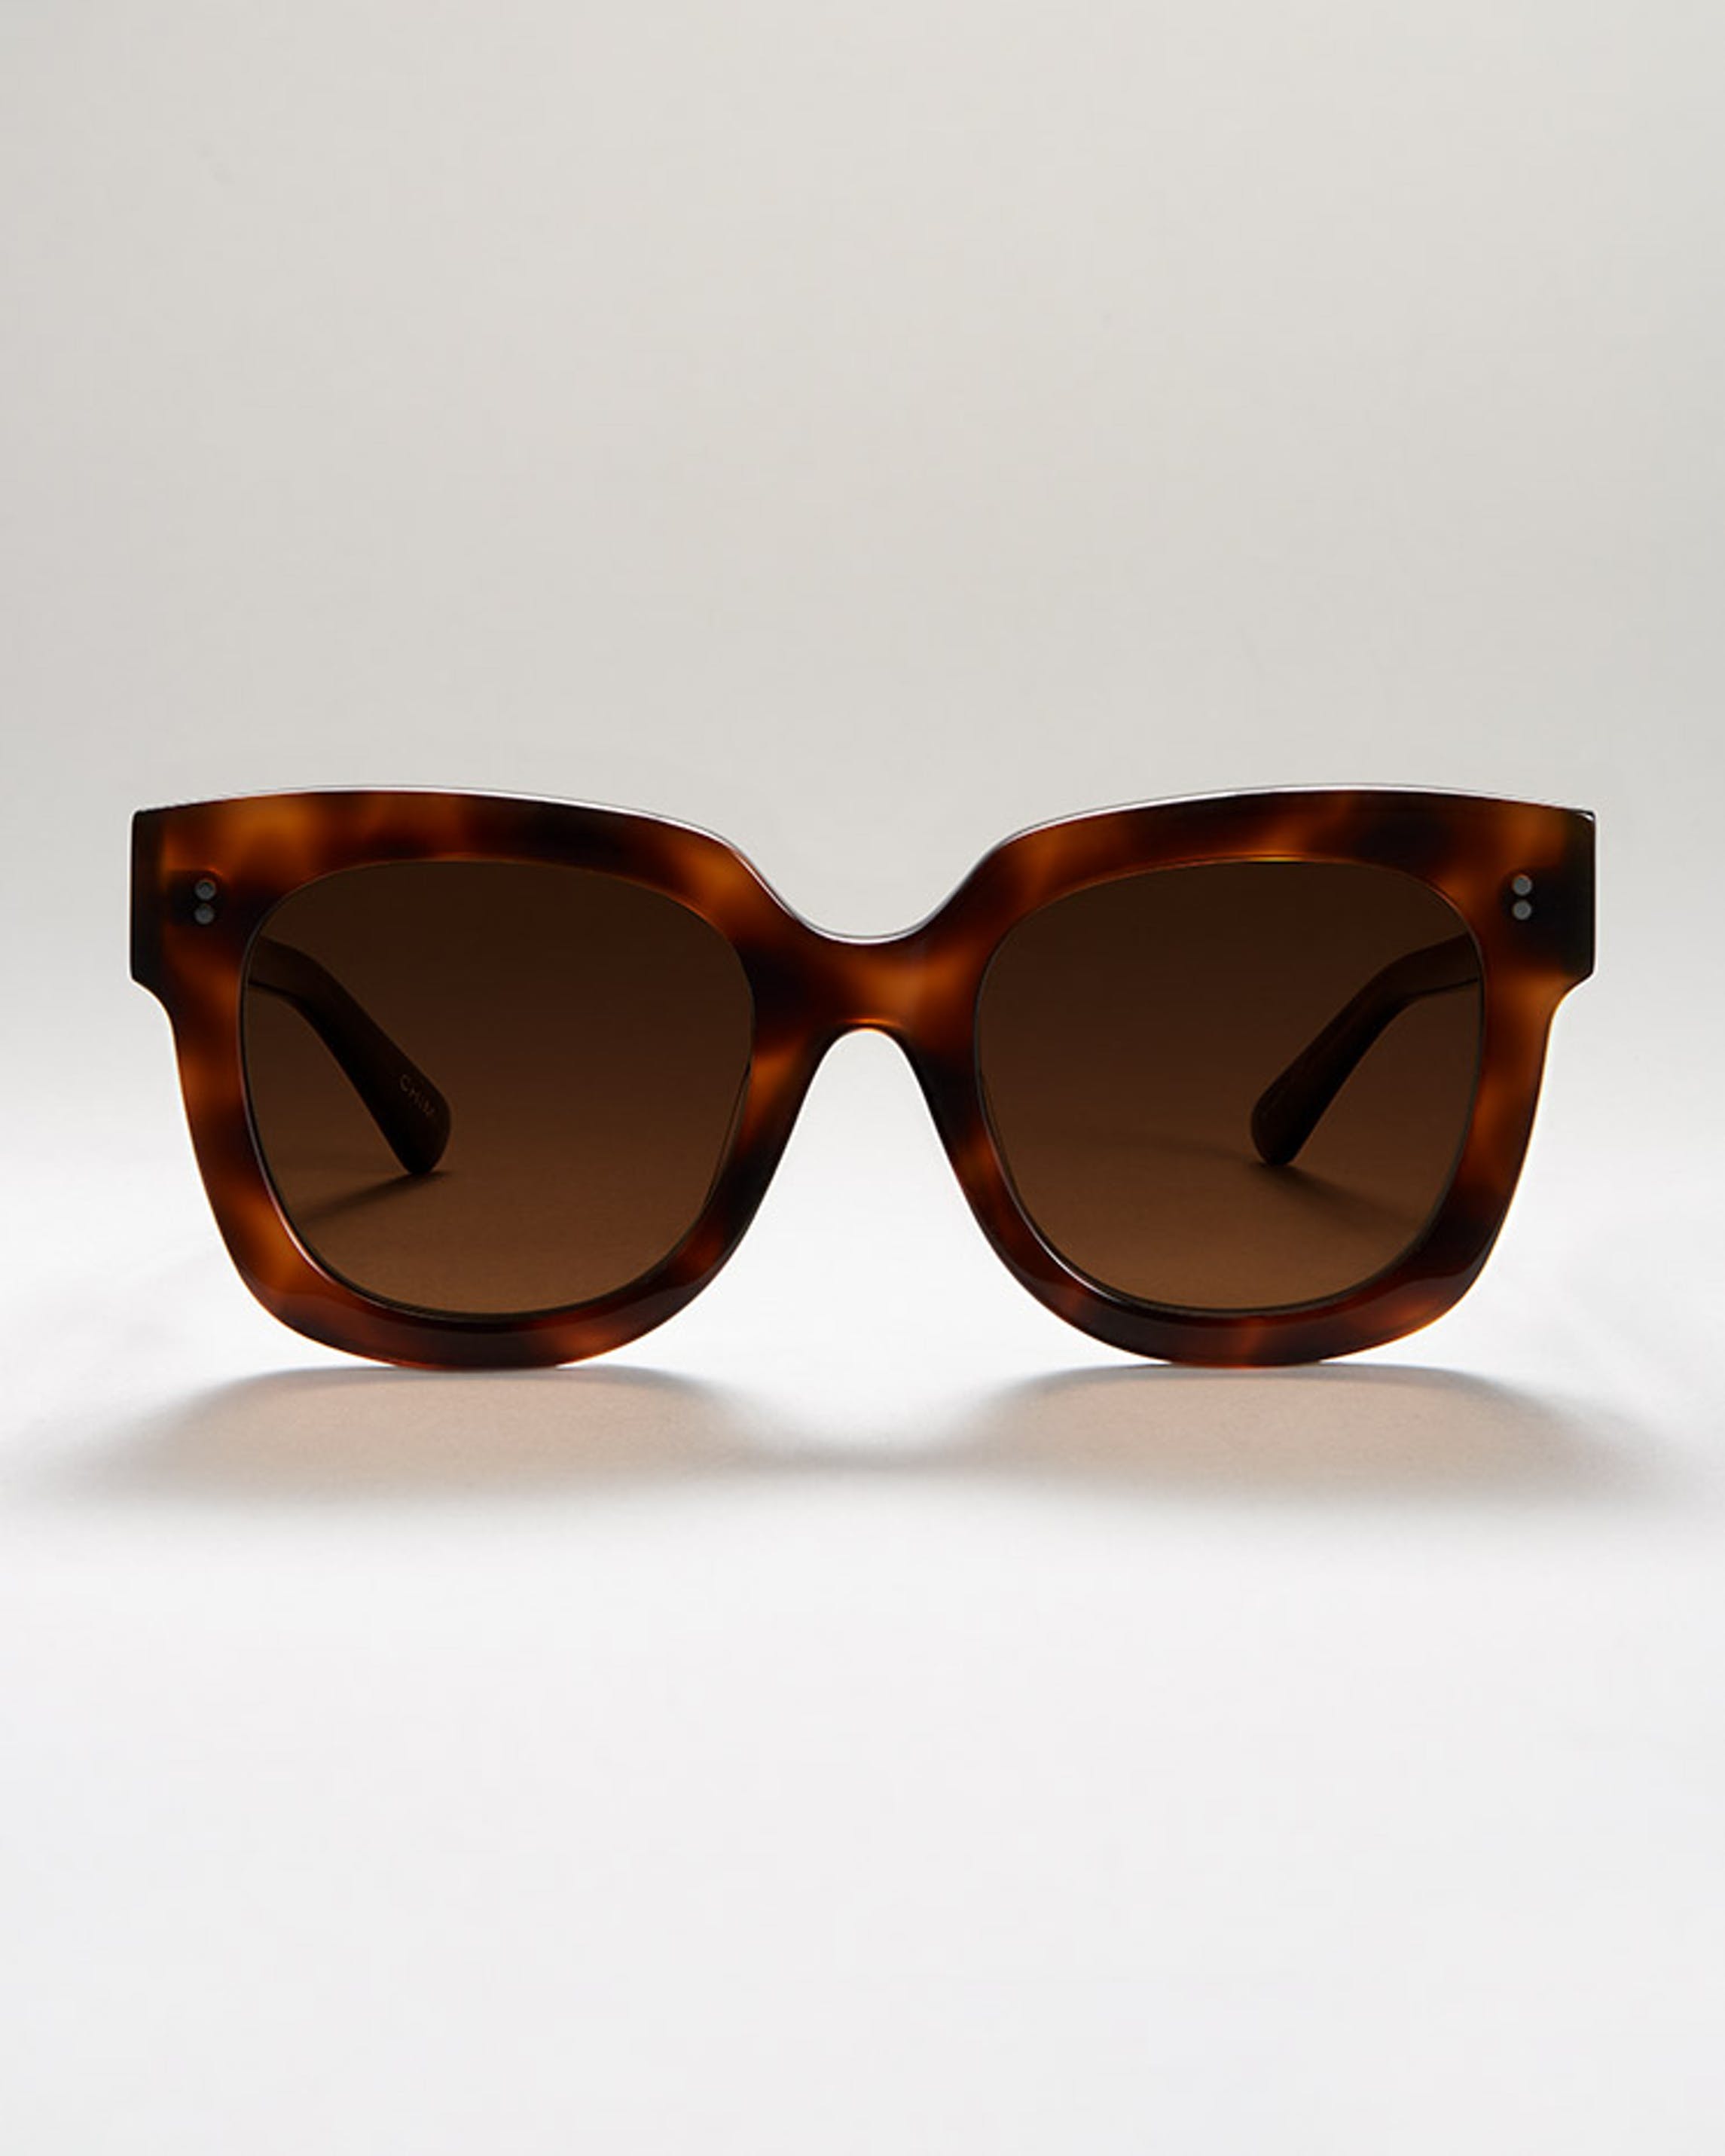 Oversize sunglasses in tortoishell frame with brown lenses